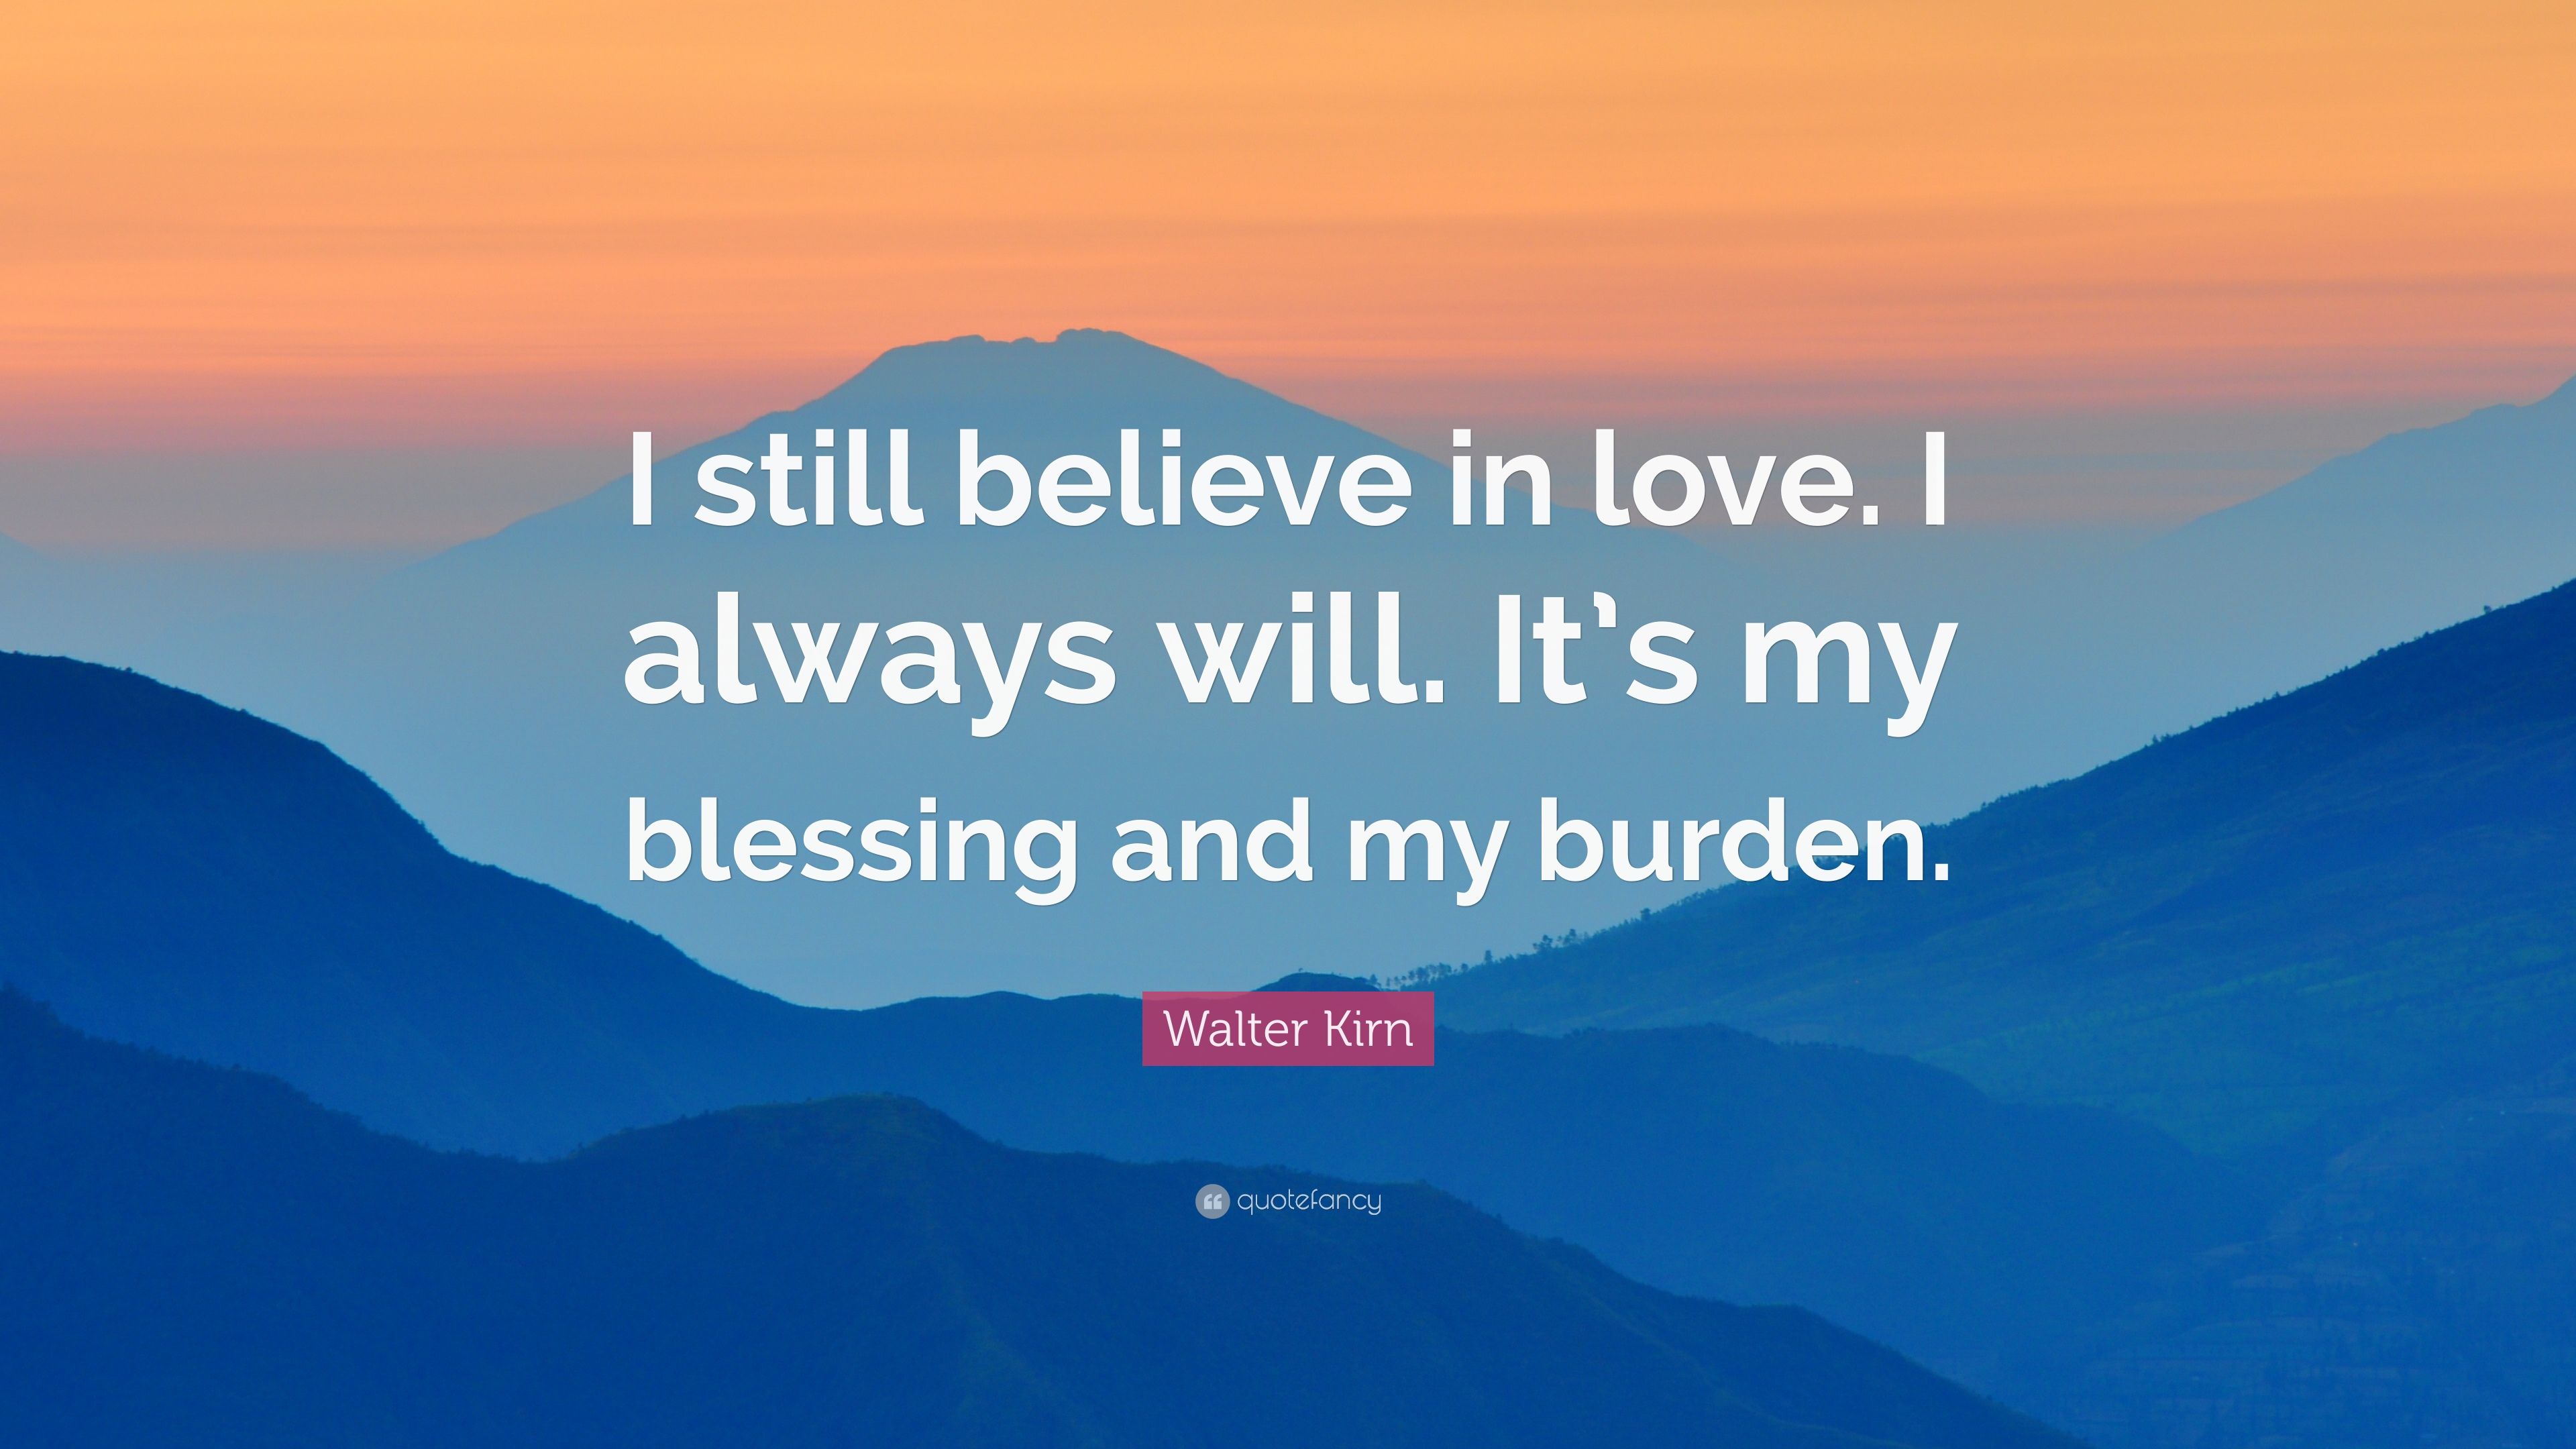 Walter Kirn Quote: “I still believe in love. I always will. It's